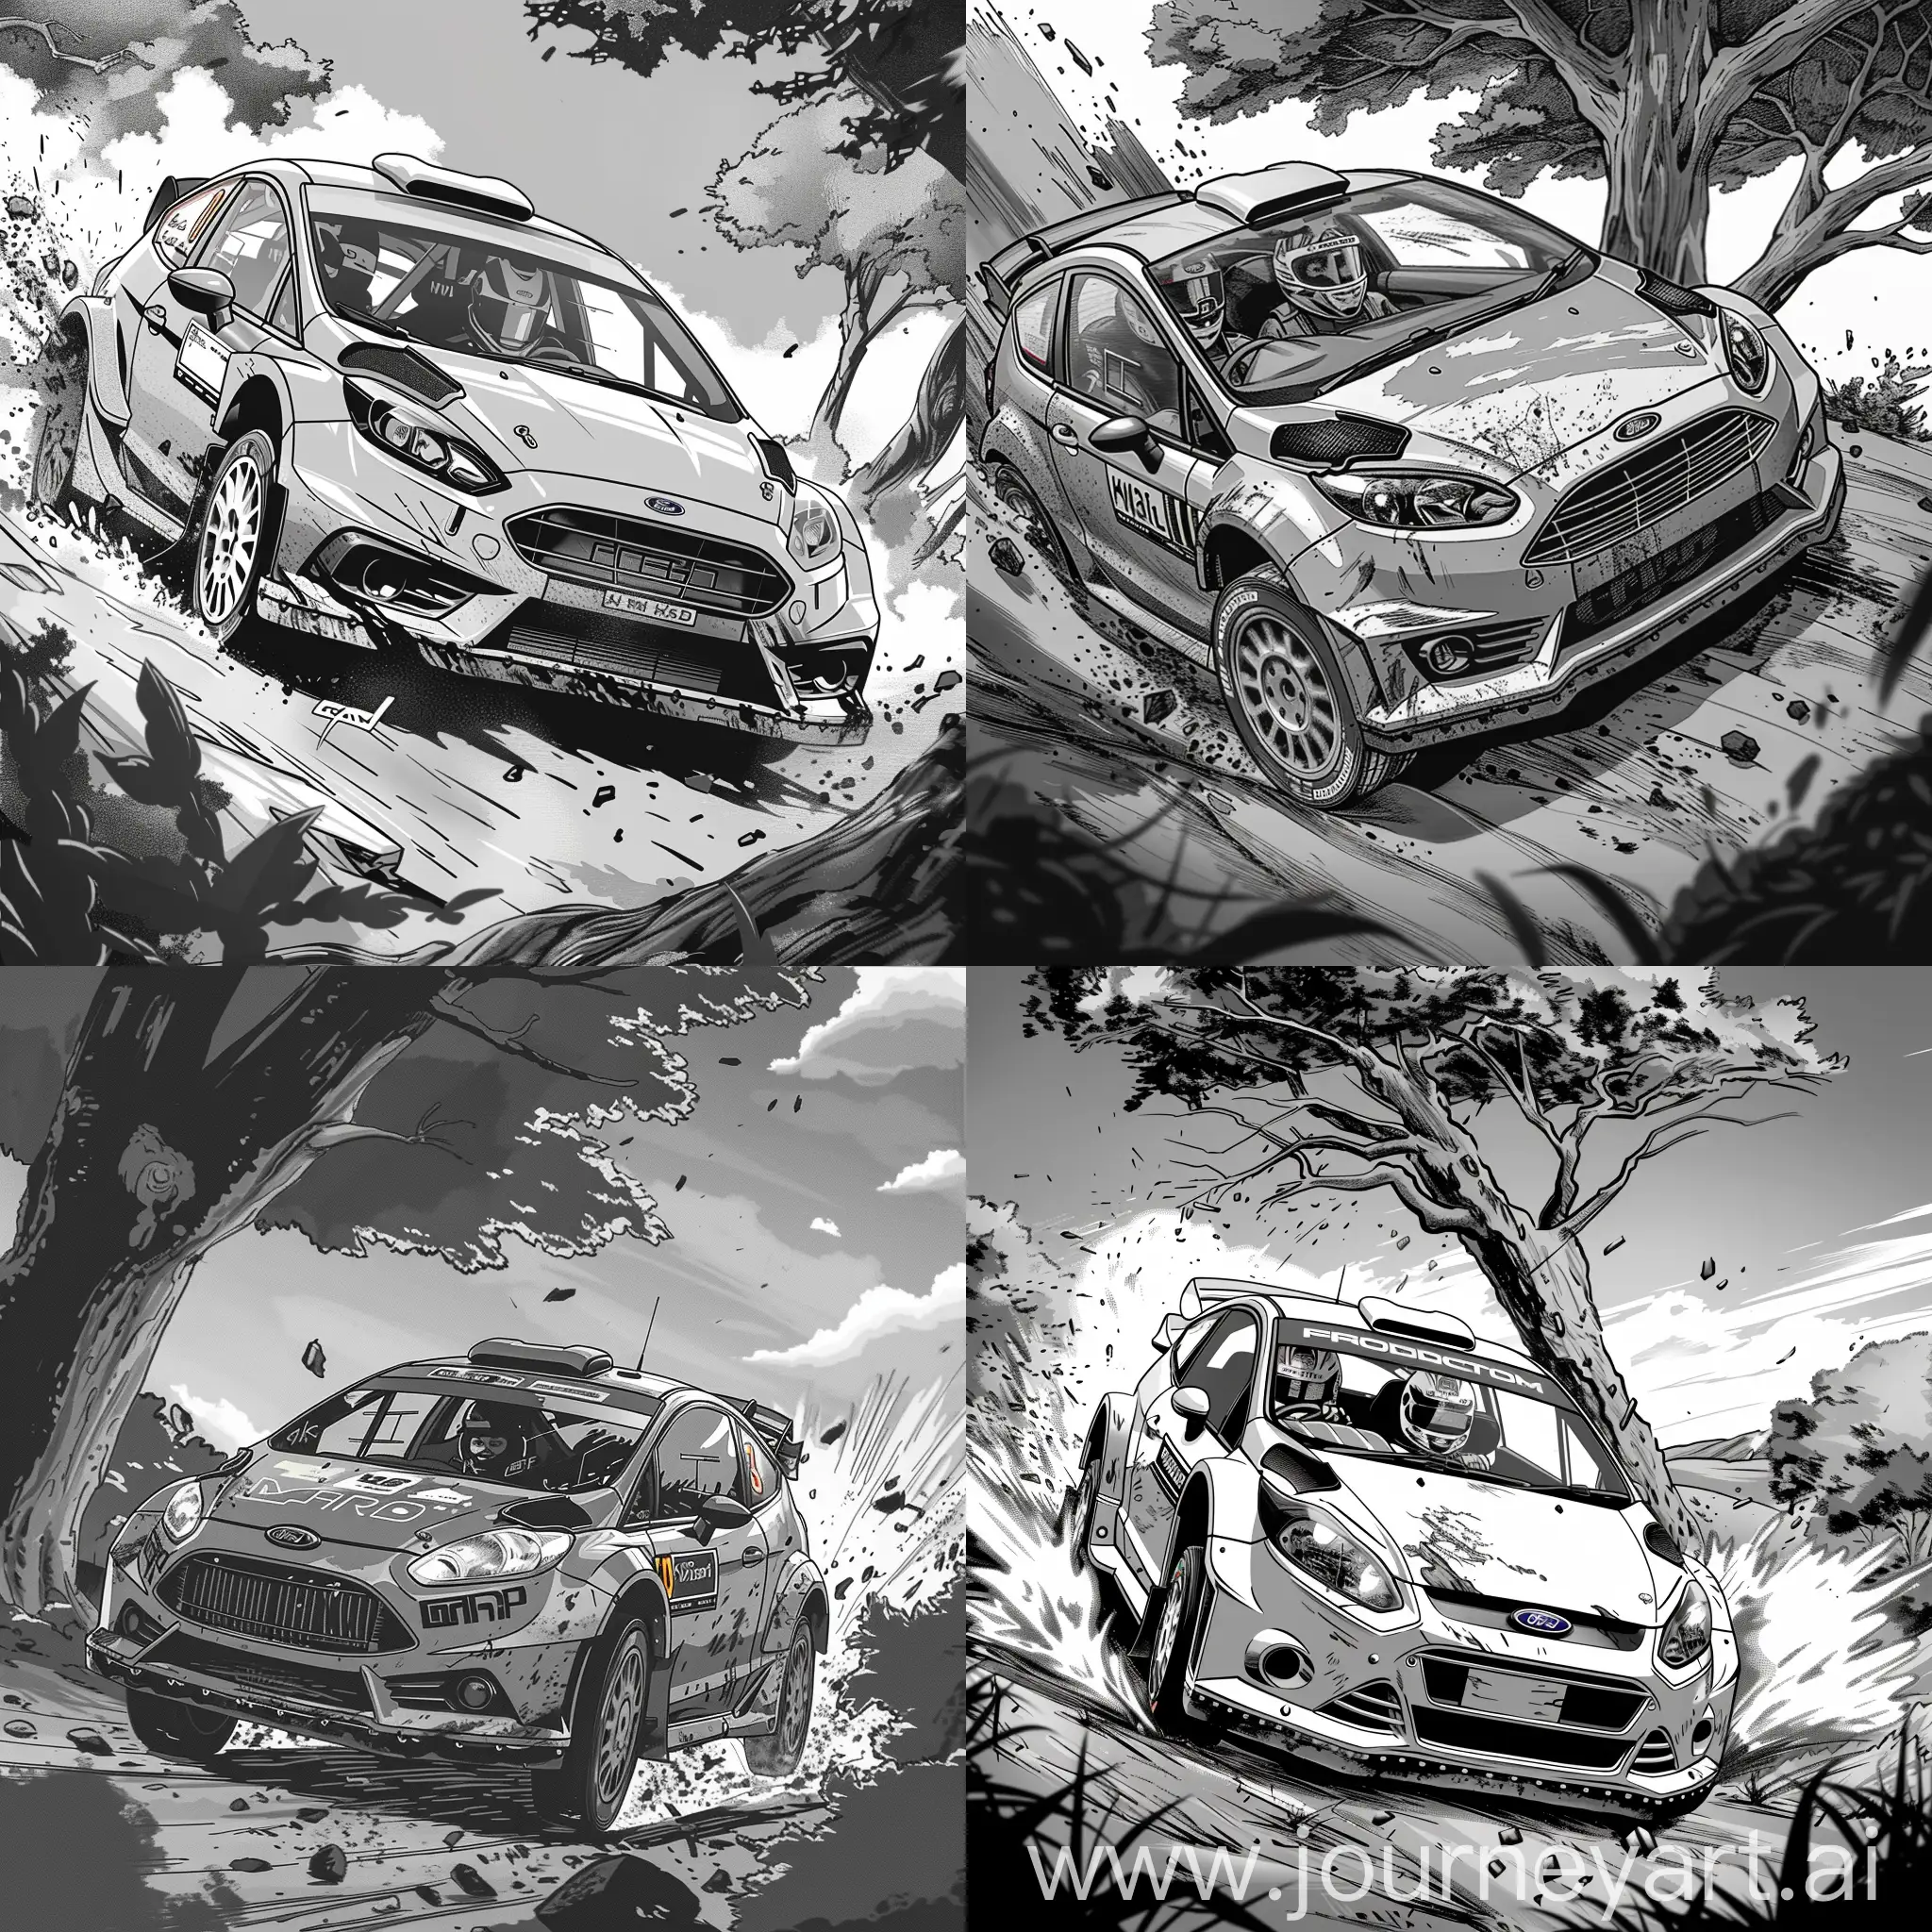 Rally-Driver-in-Ford-Fiesta-WRC-Crashing-Into-Tree-Manga-Panel